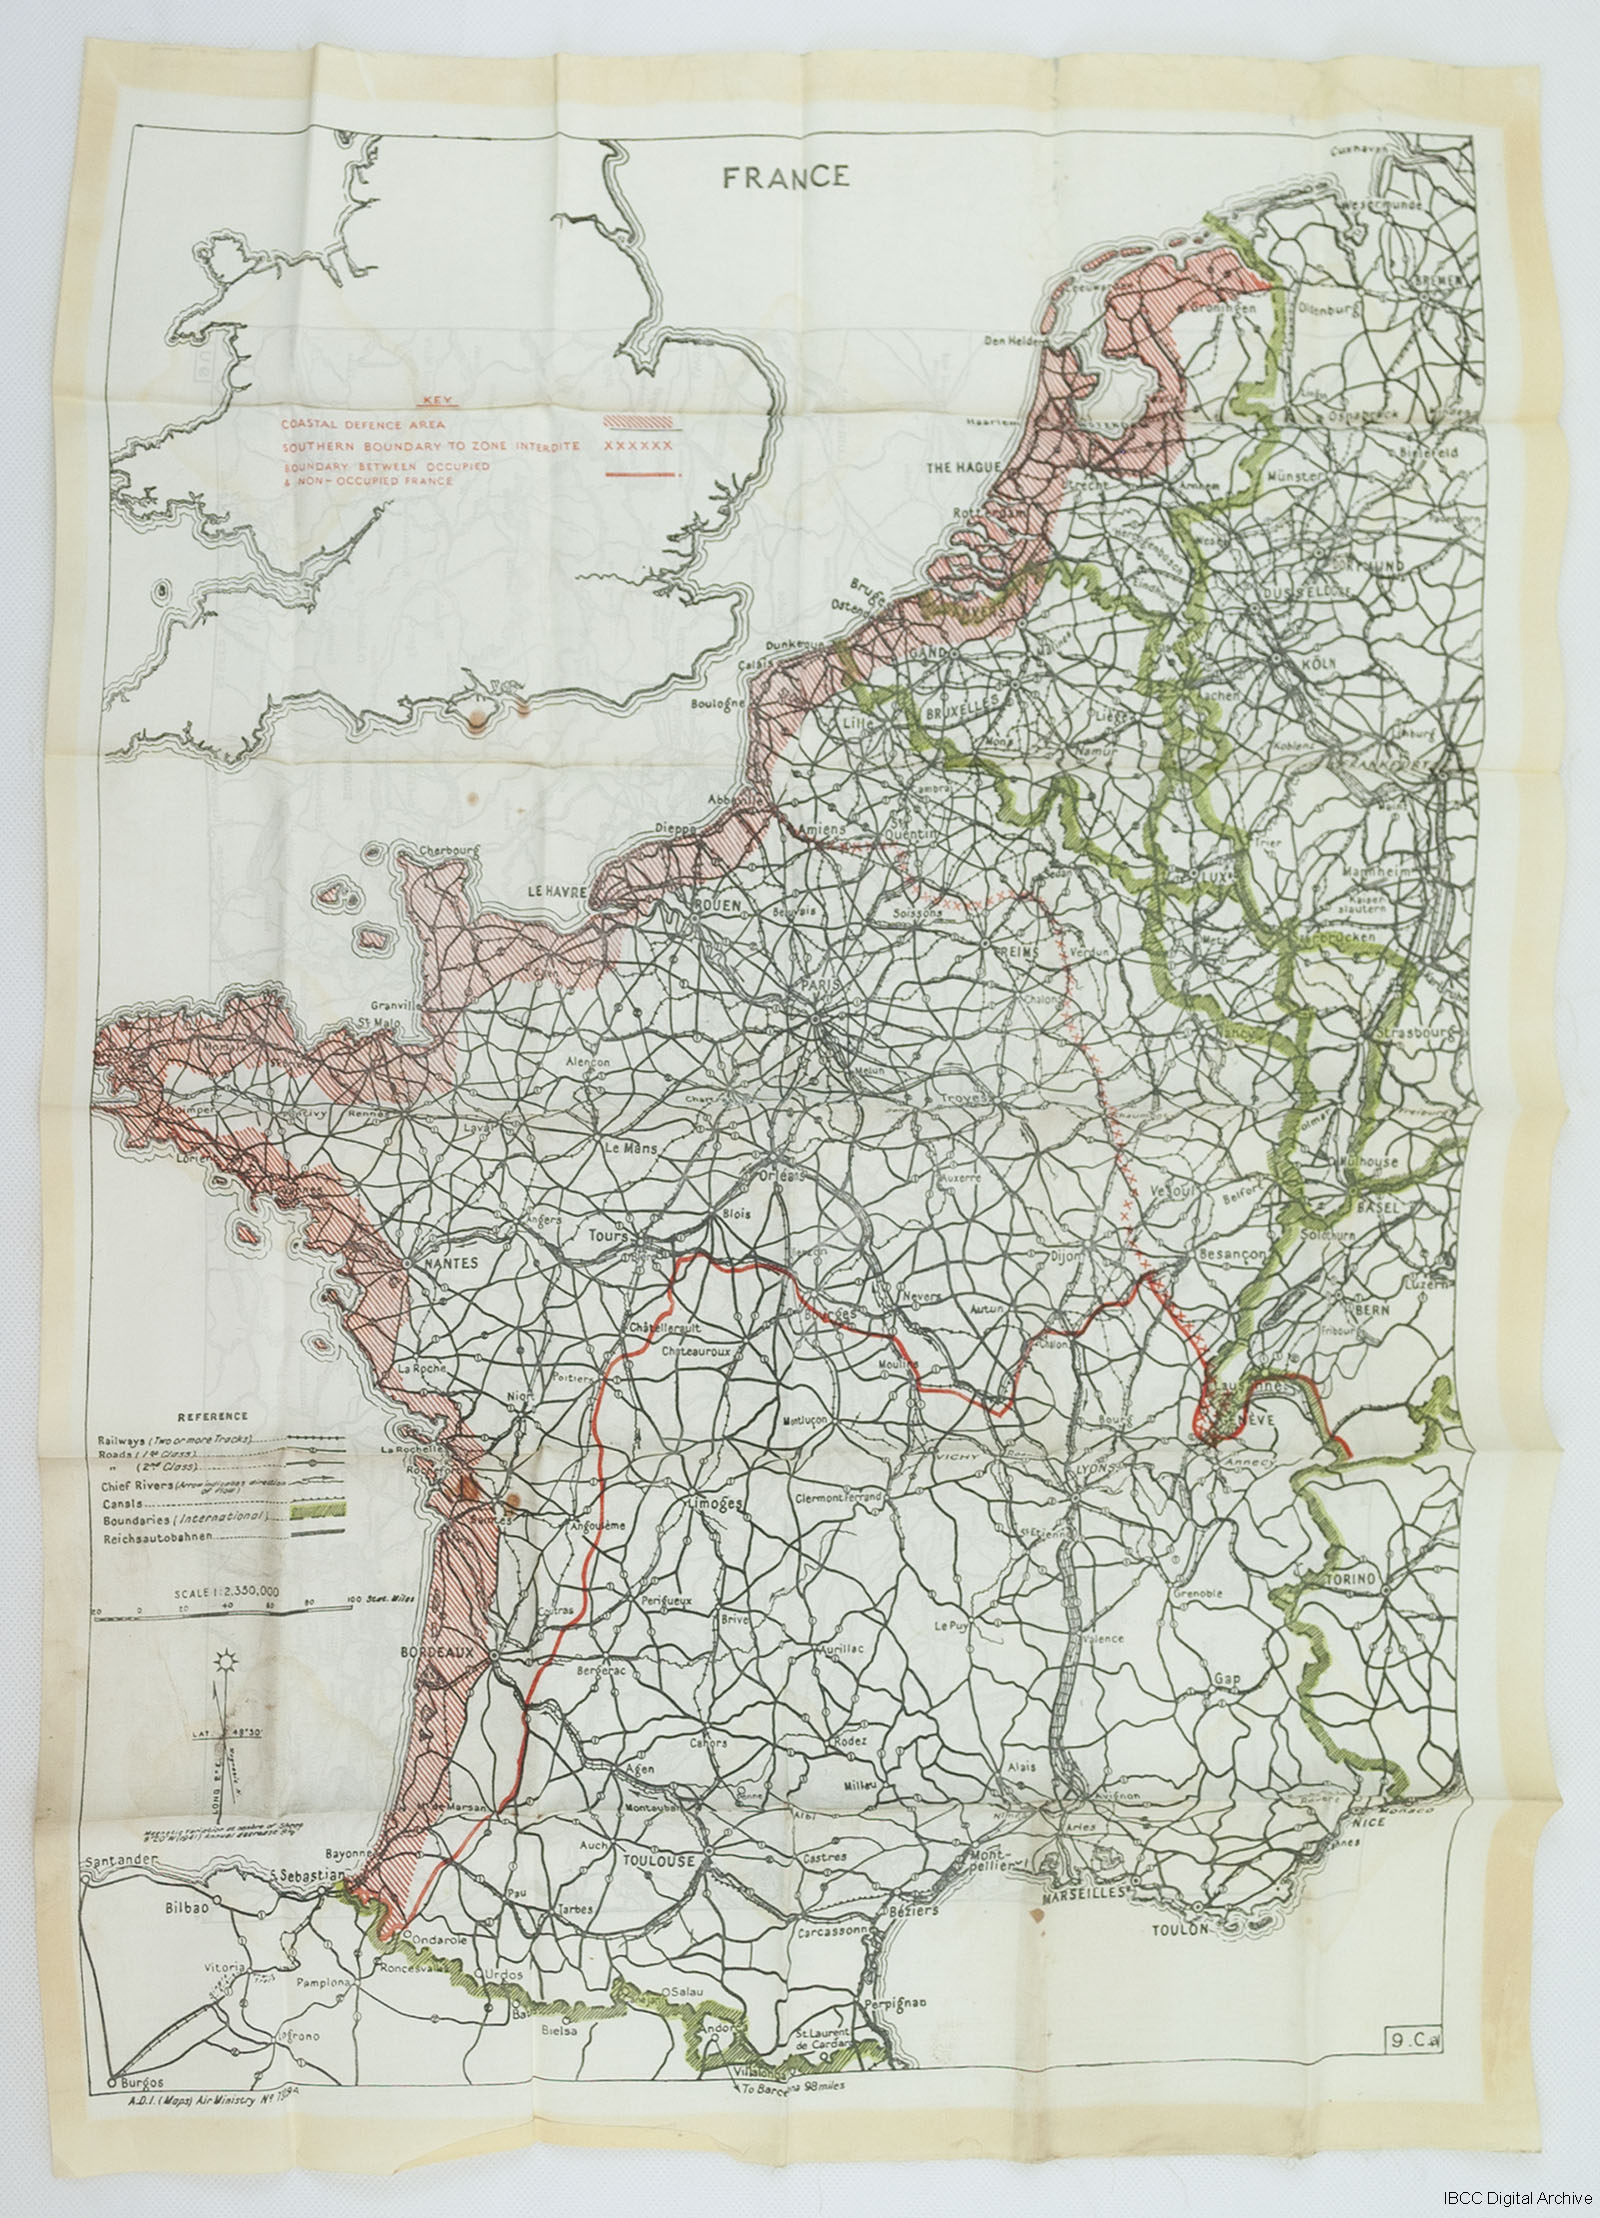 Map of France · IBCC Digital Archive